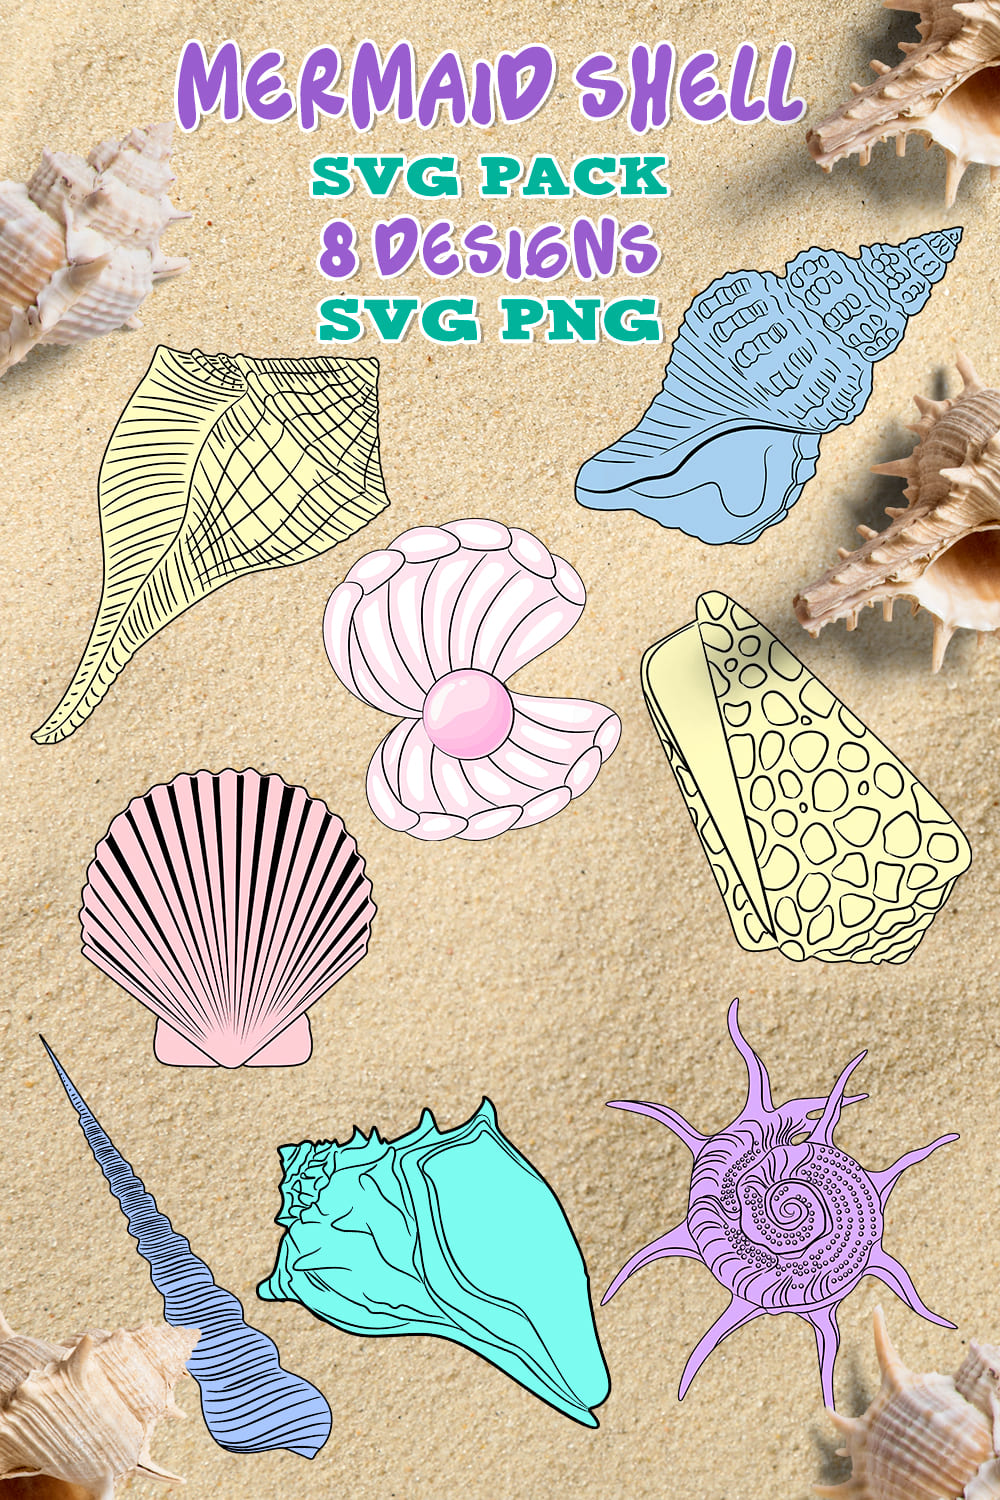 Mermaid Shell Svg - Pinterest.